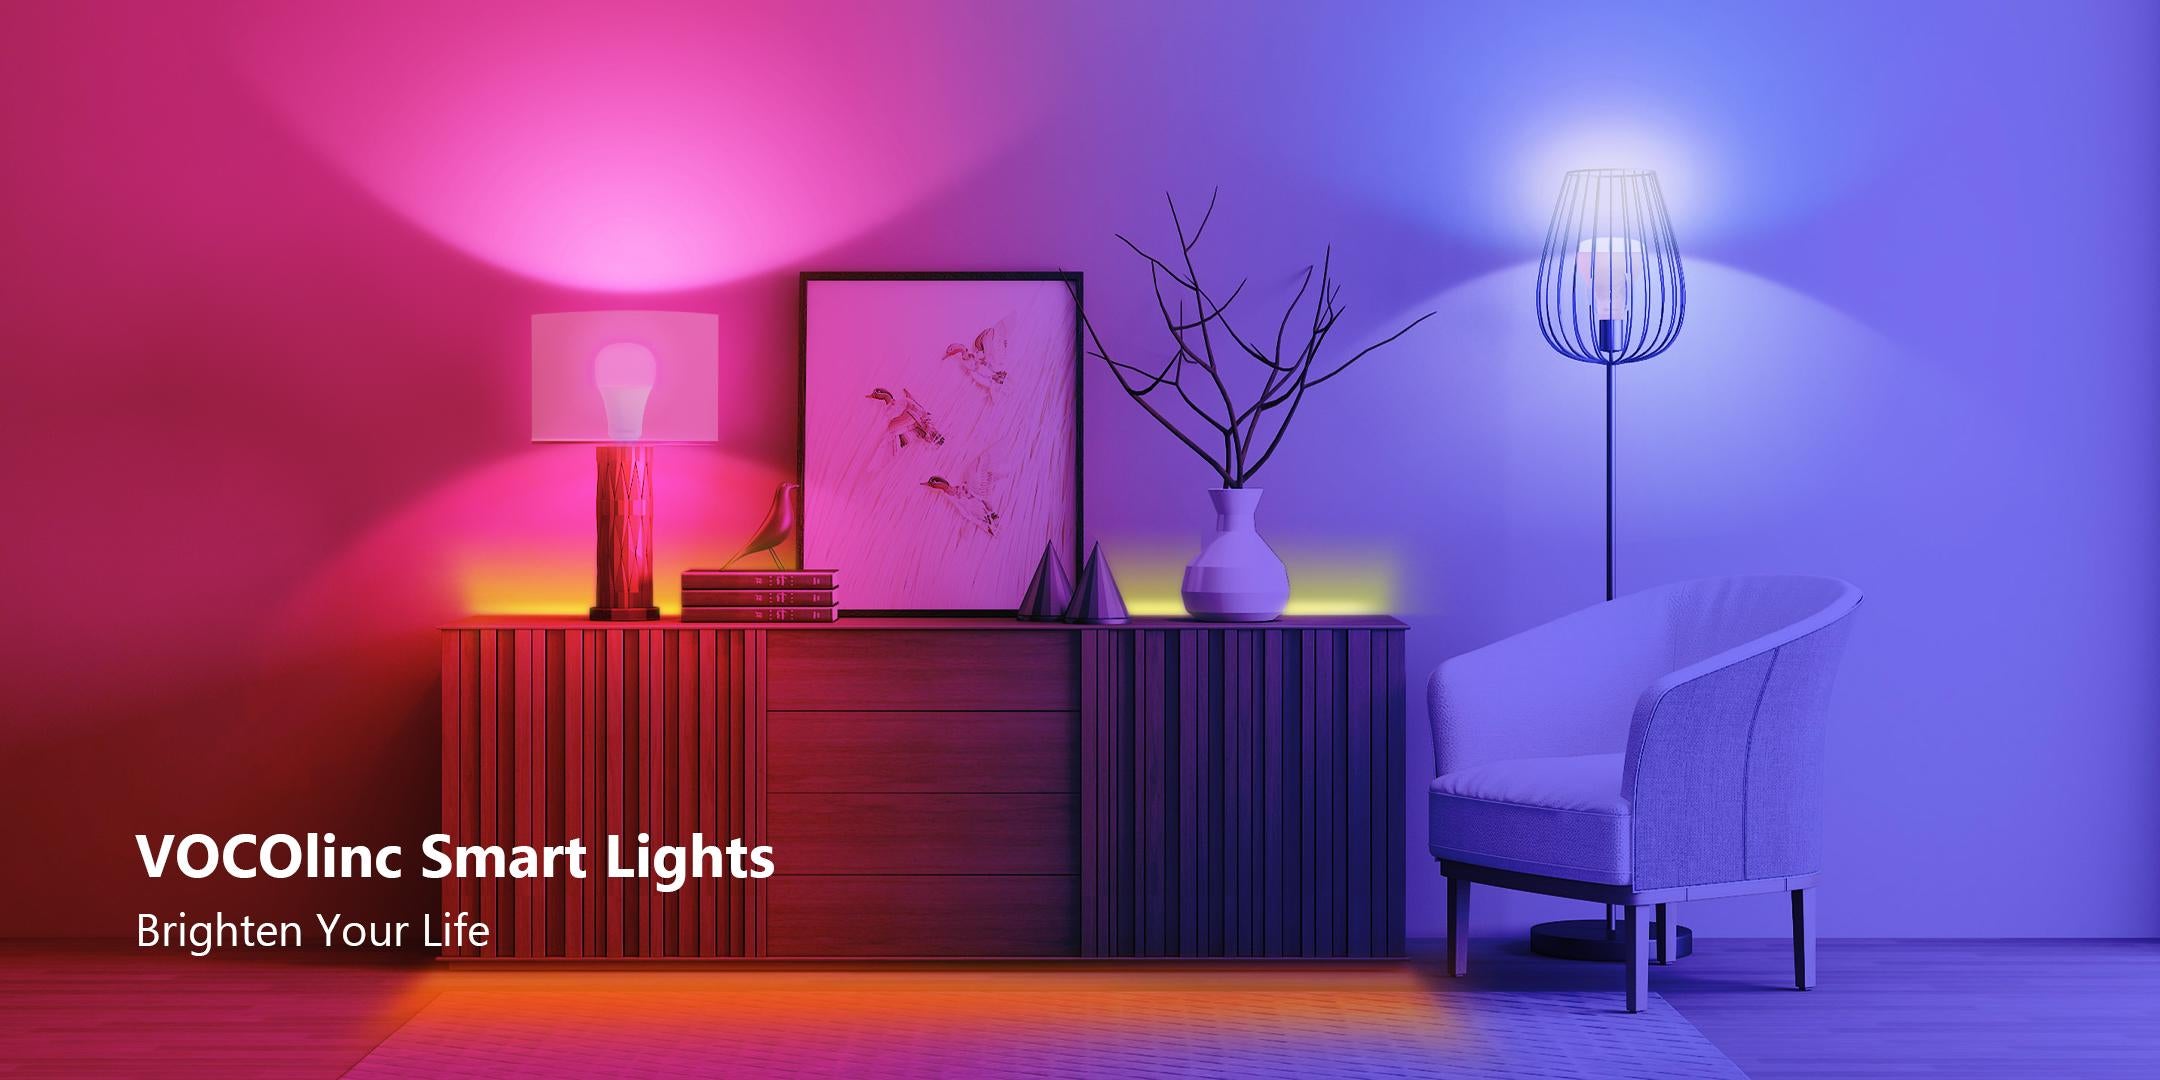 VOCOlinc Smart Lights-Brighten Your Life